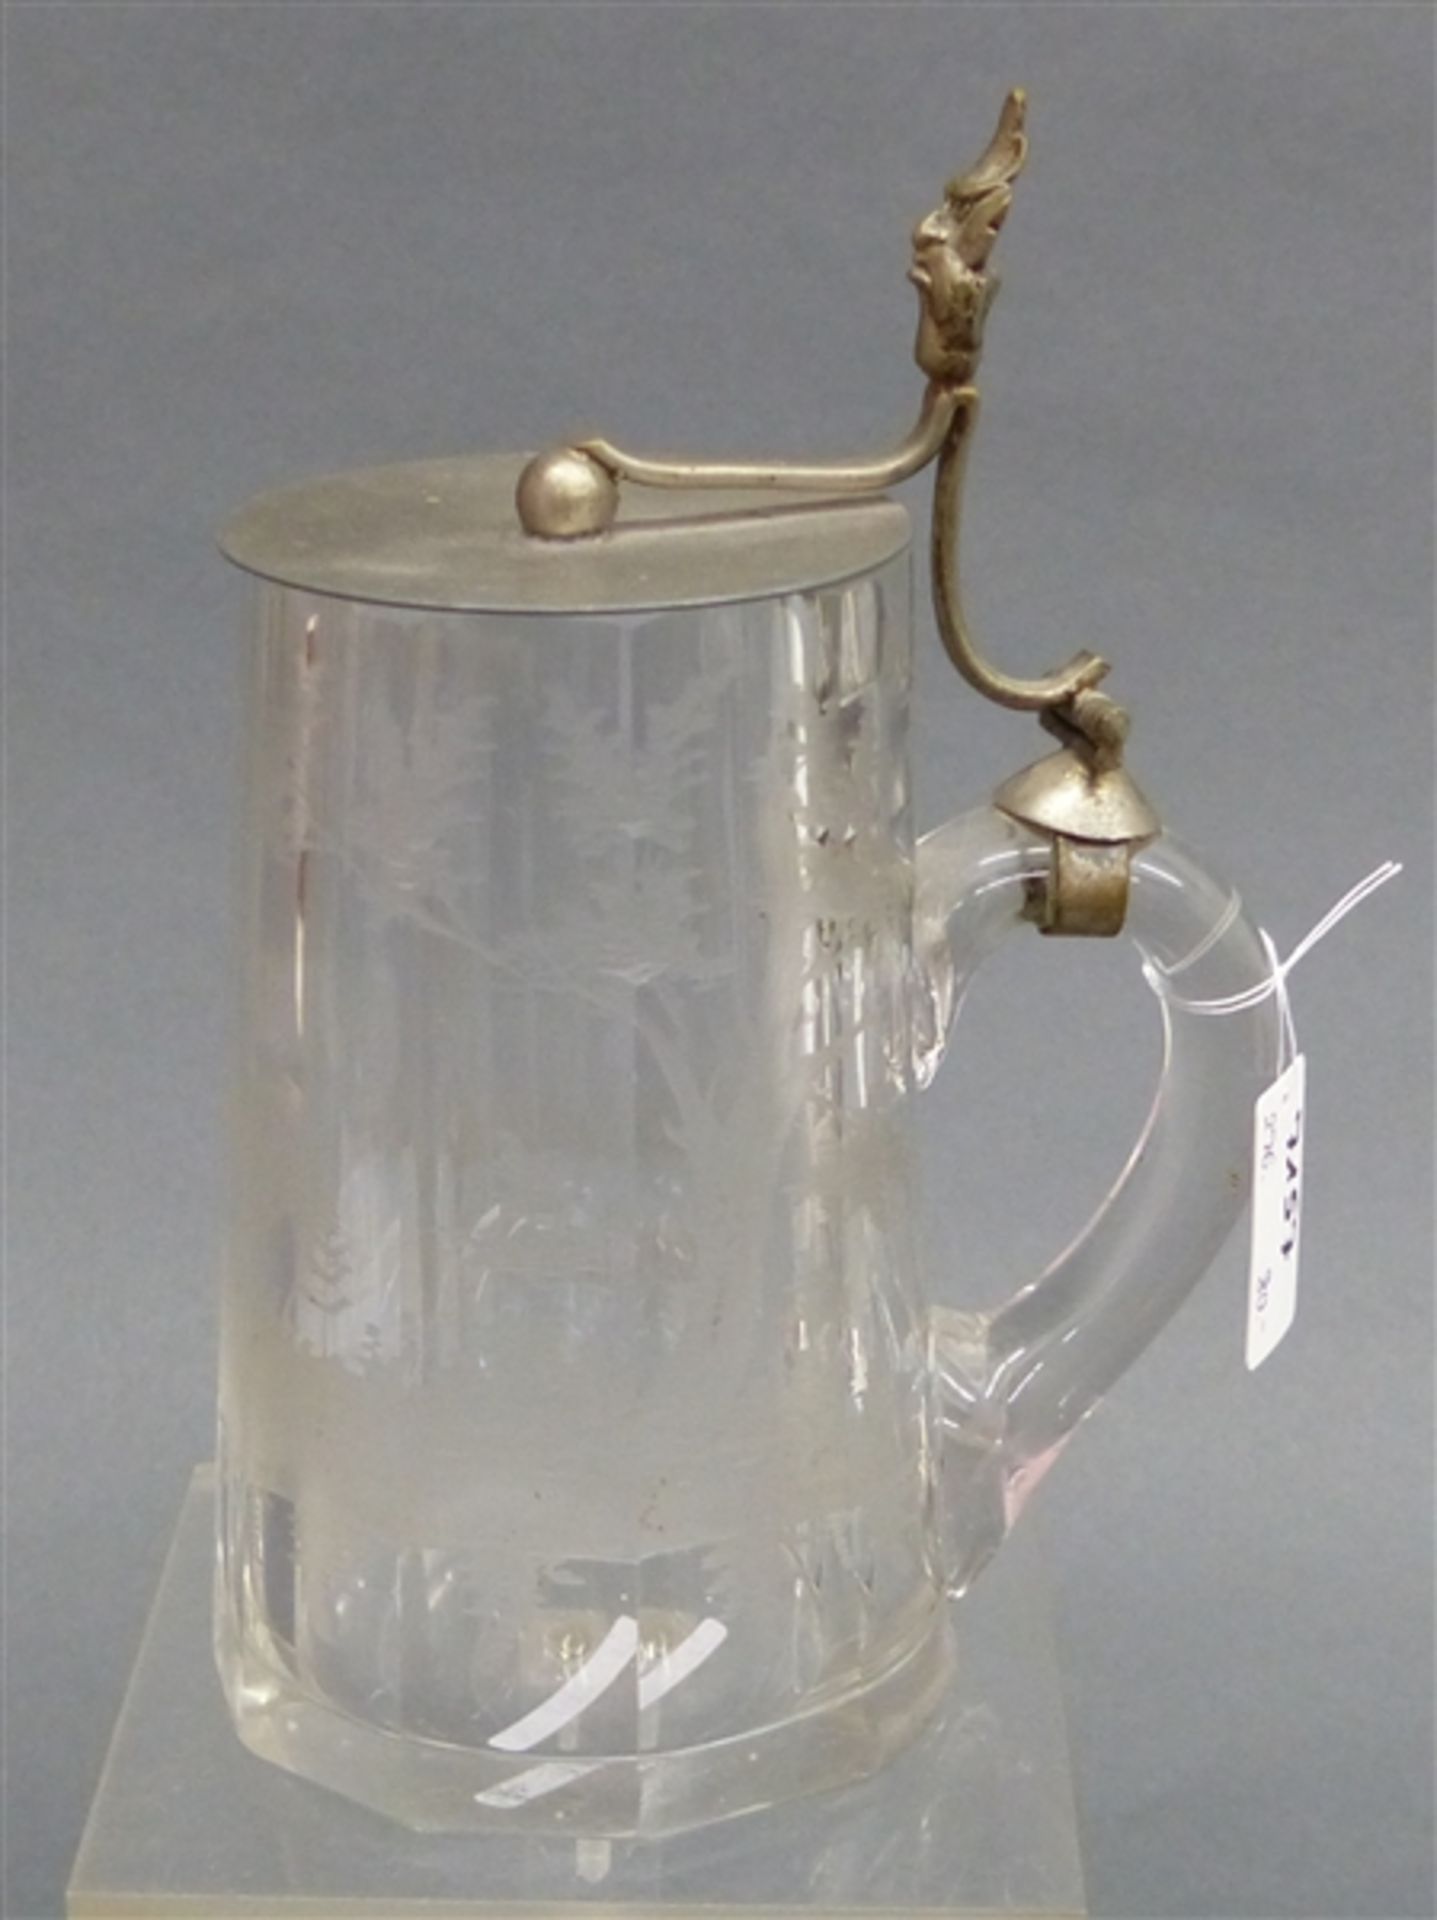 Bierkrug farbloses Glas, 0,3 ltr., 19. Jh., beschliffen, Jagdmotiv, Metalldeckel, h 16,5 cm,